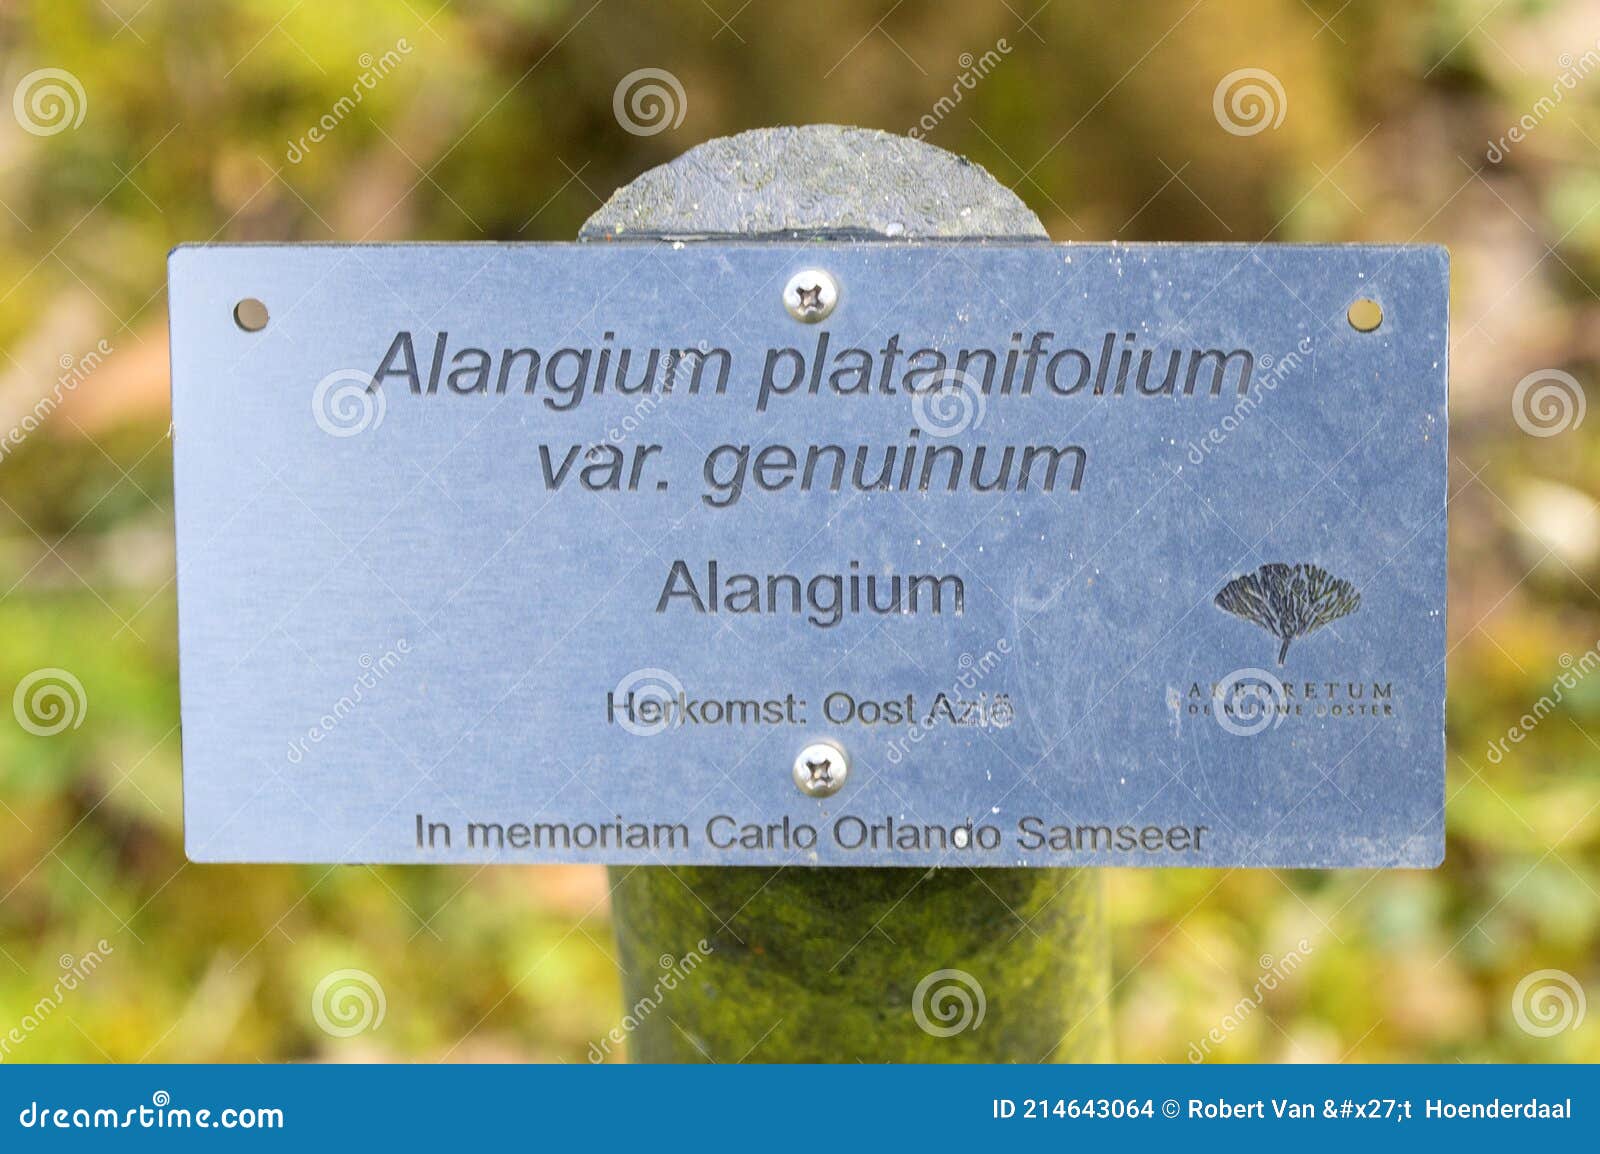 Sign Alangium Platanifolium Genuinum De Nieuwe Ooster at Amsterdam the Netherlands 26-3-2021 Editorial Image - Image of name, plate: 214643064